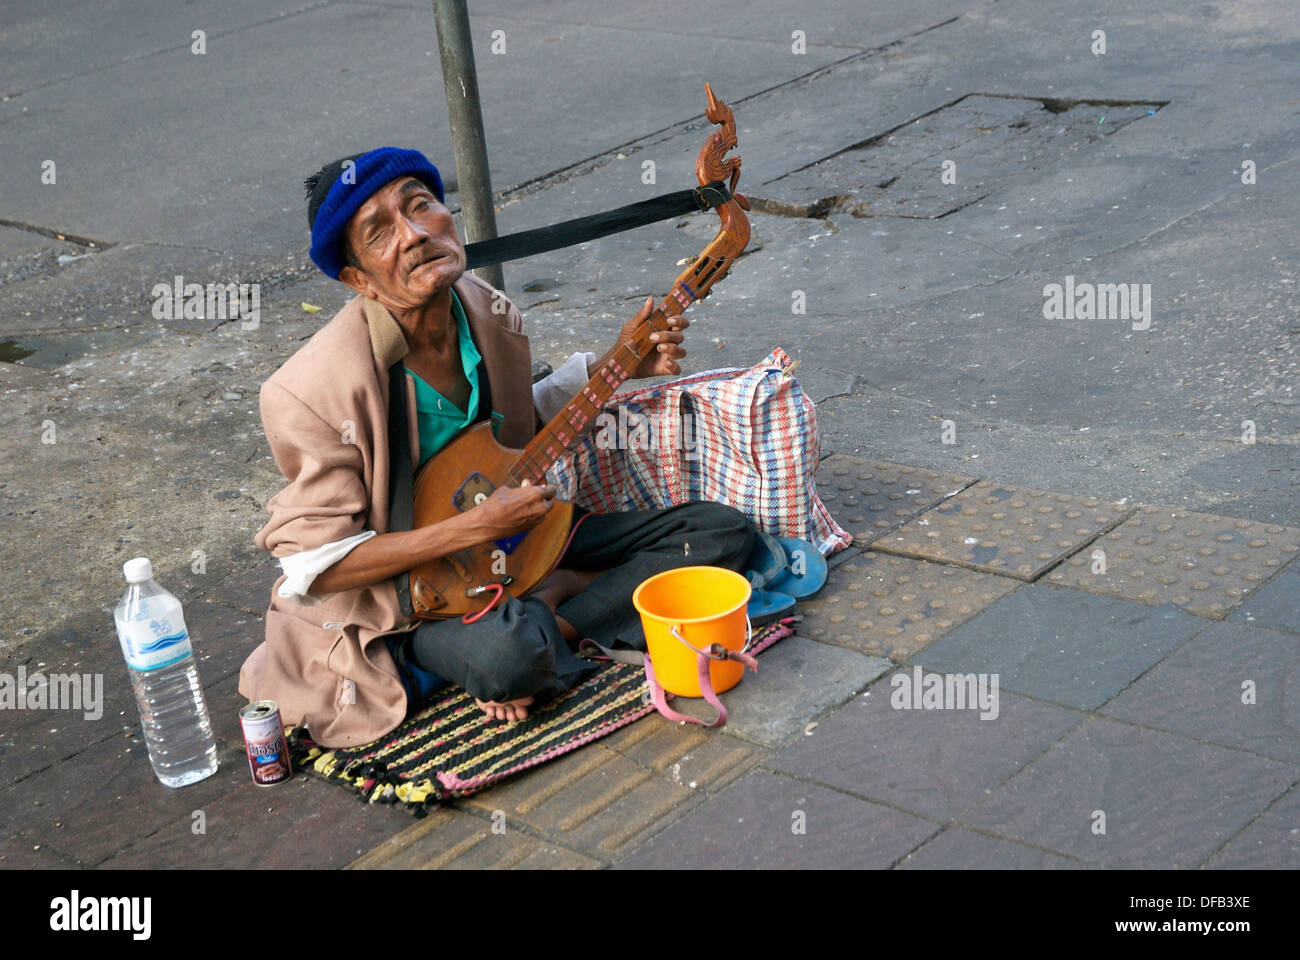 Poor beggar with severe facial injury plays guitar Asian Stock Photo